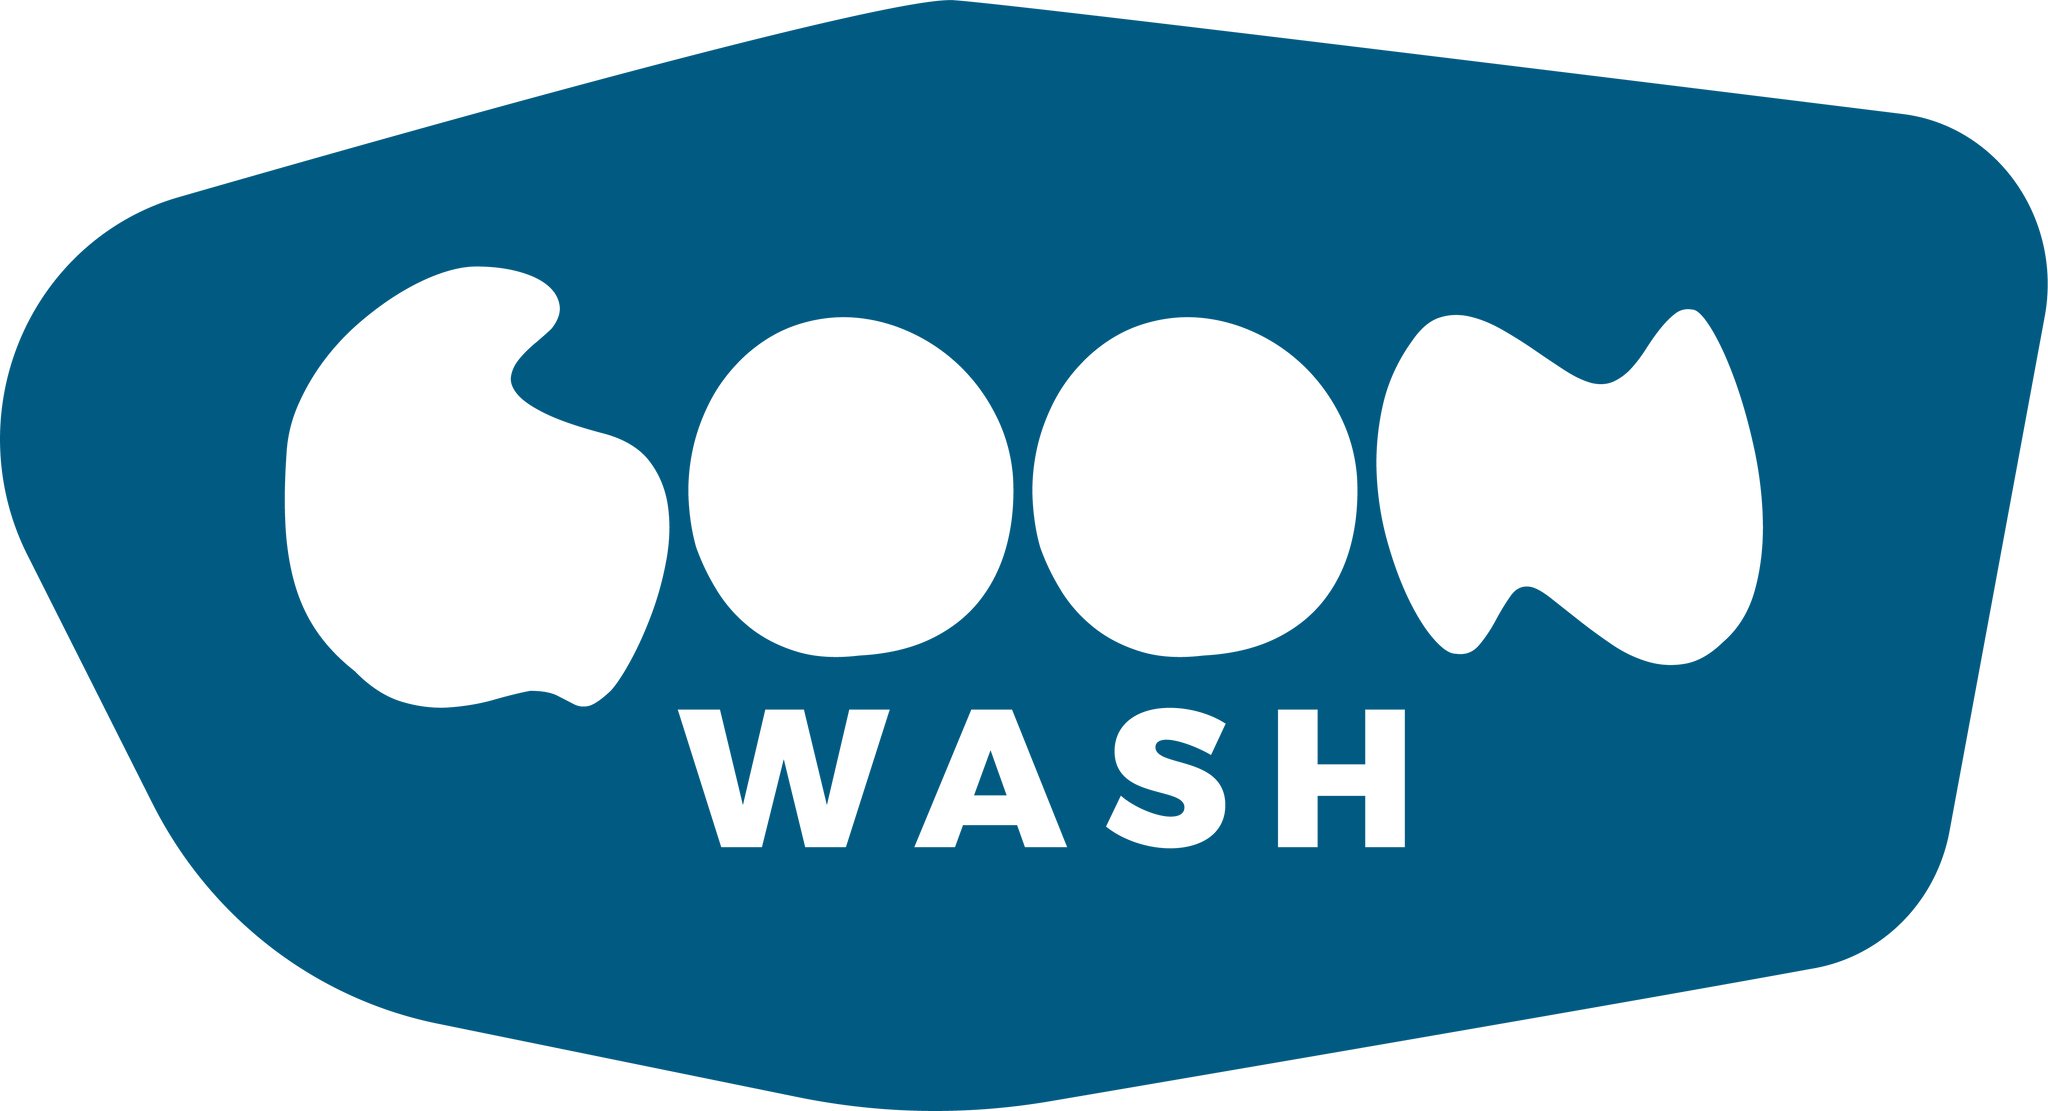 goon wash logo